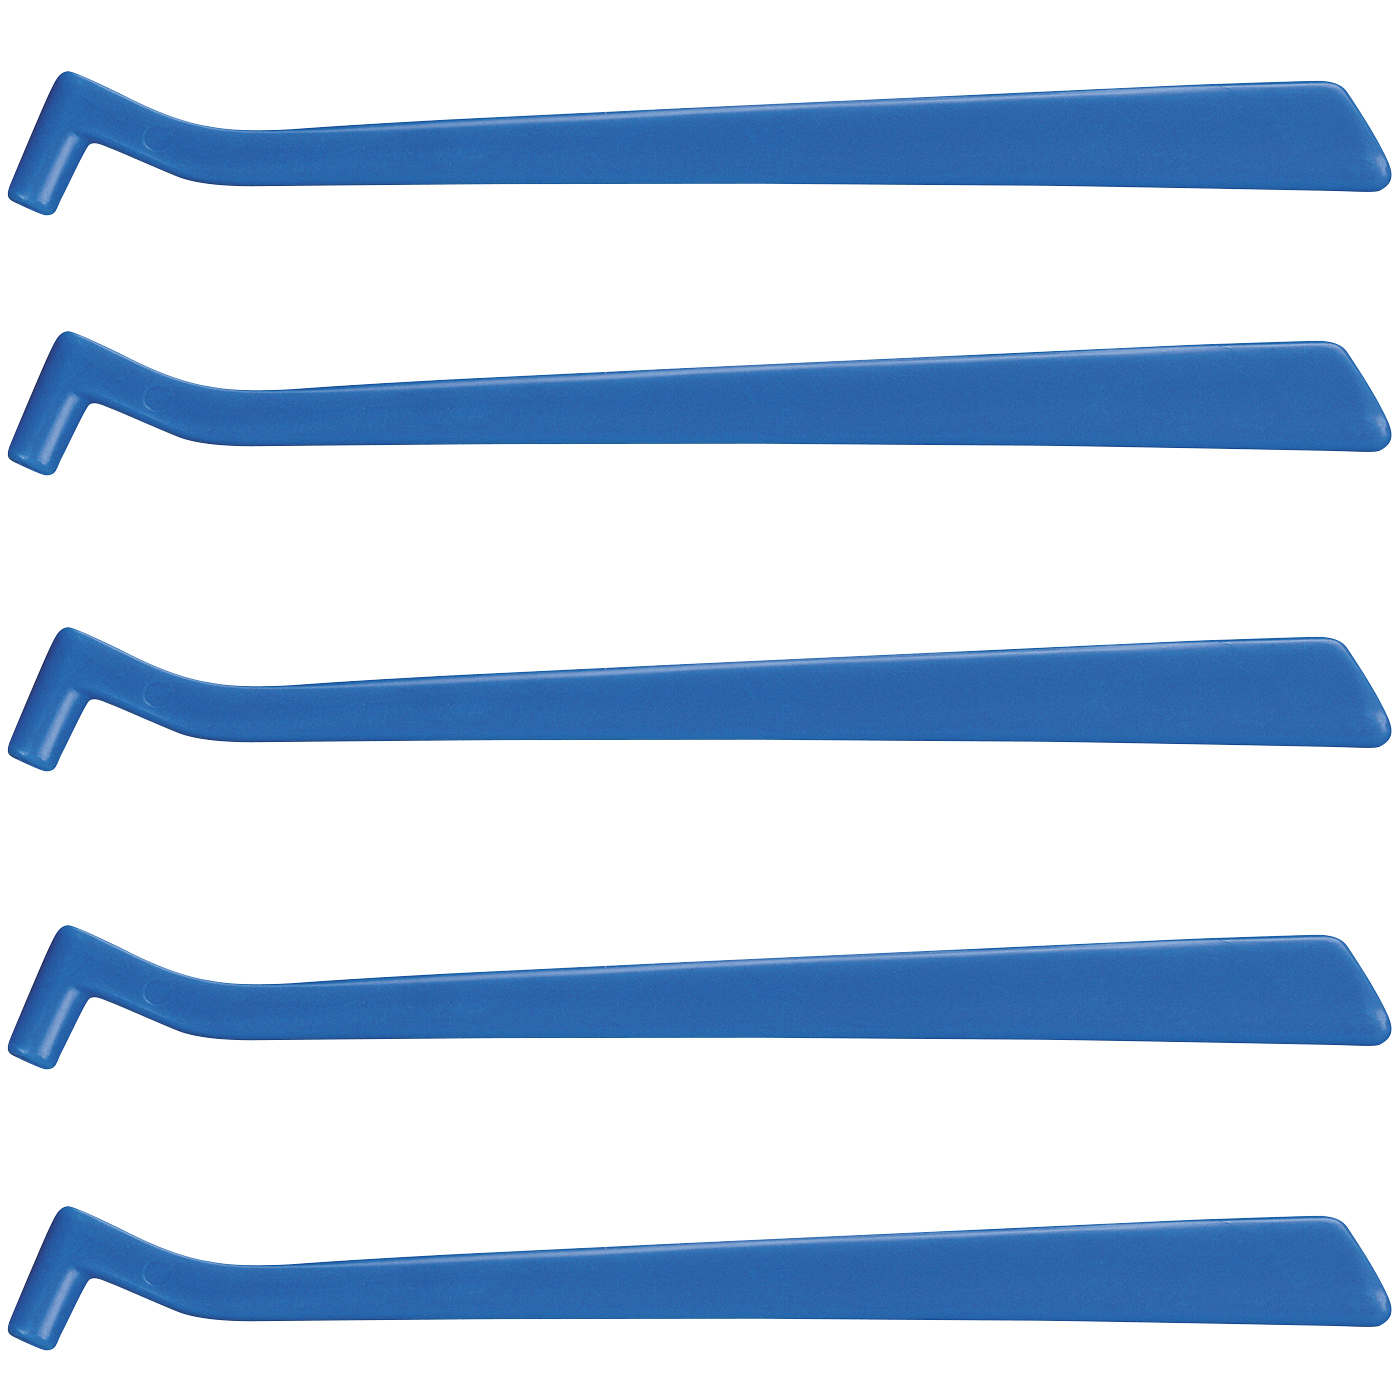 FINOPAINT brush holders, blue - 5 pieces